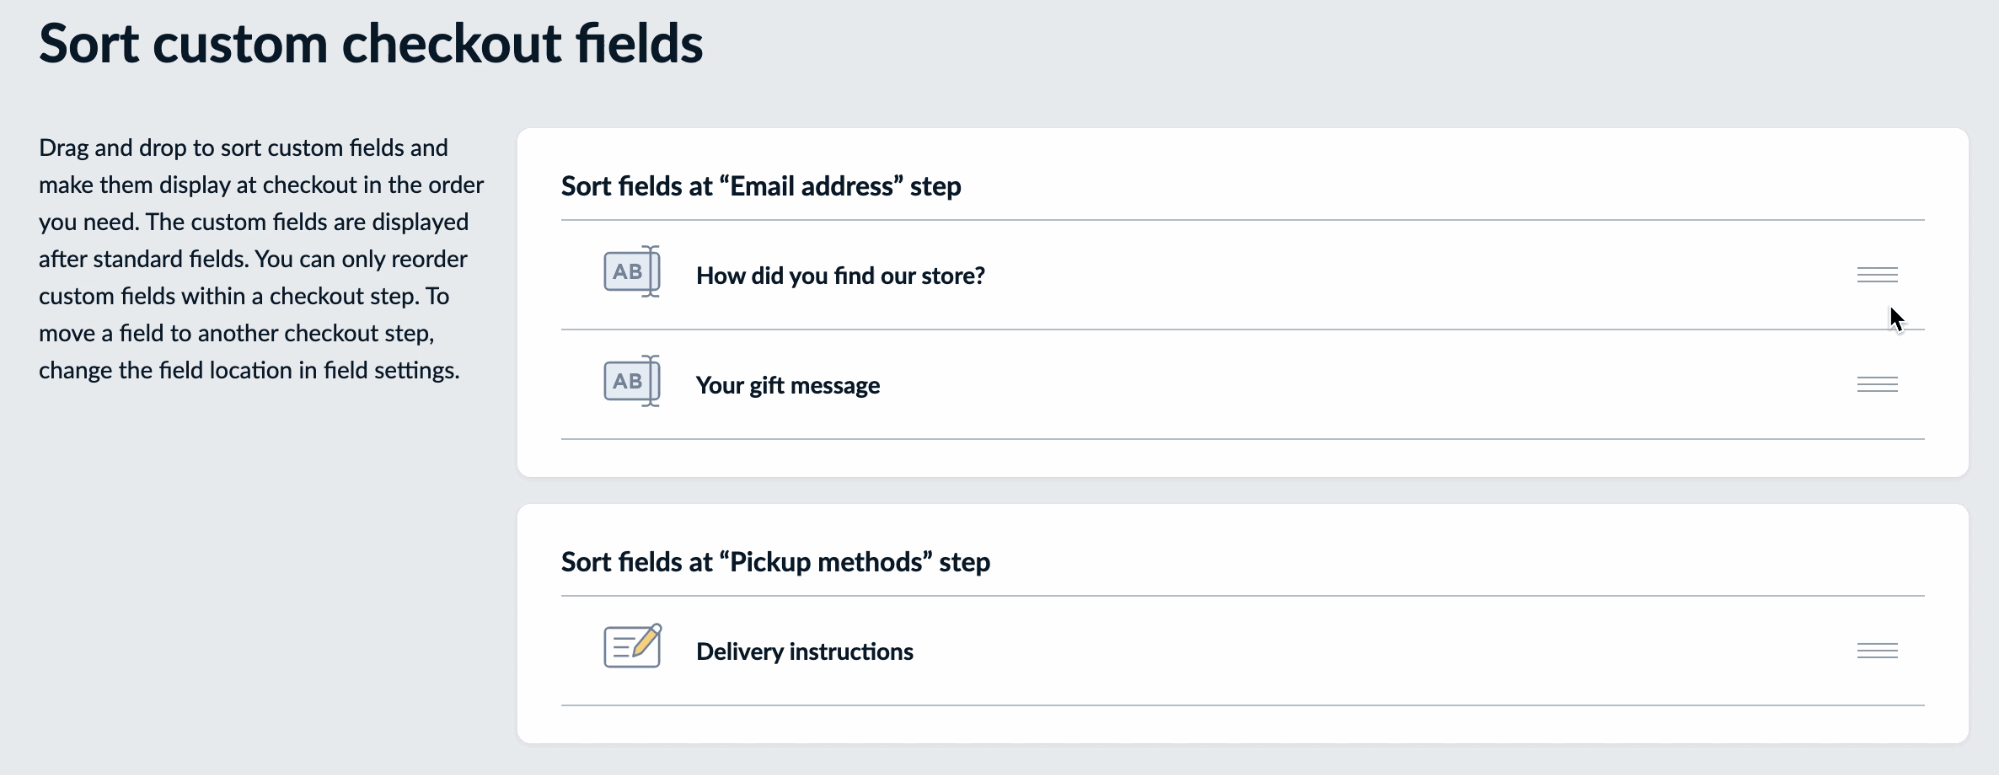 Sorting_custom_fields.gif